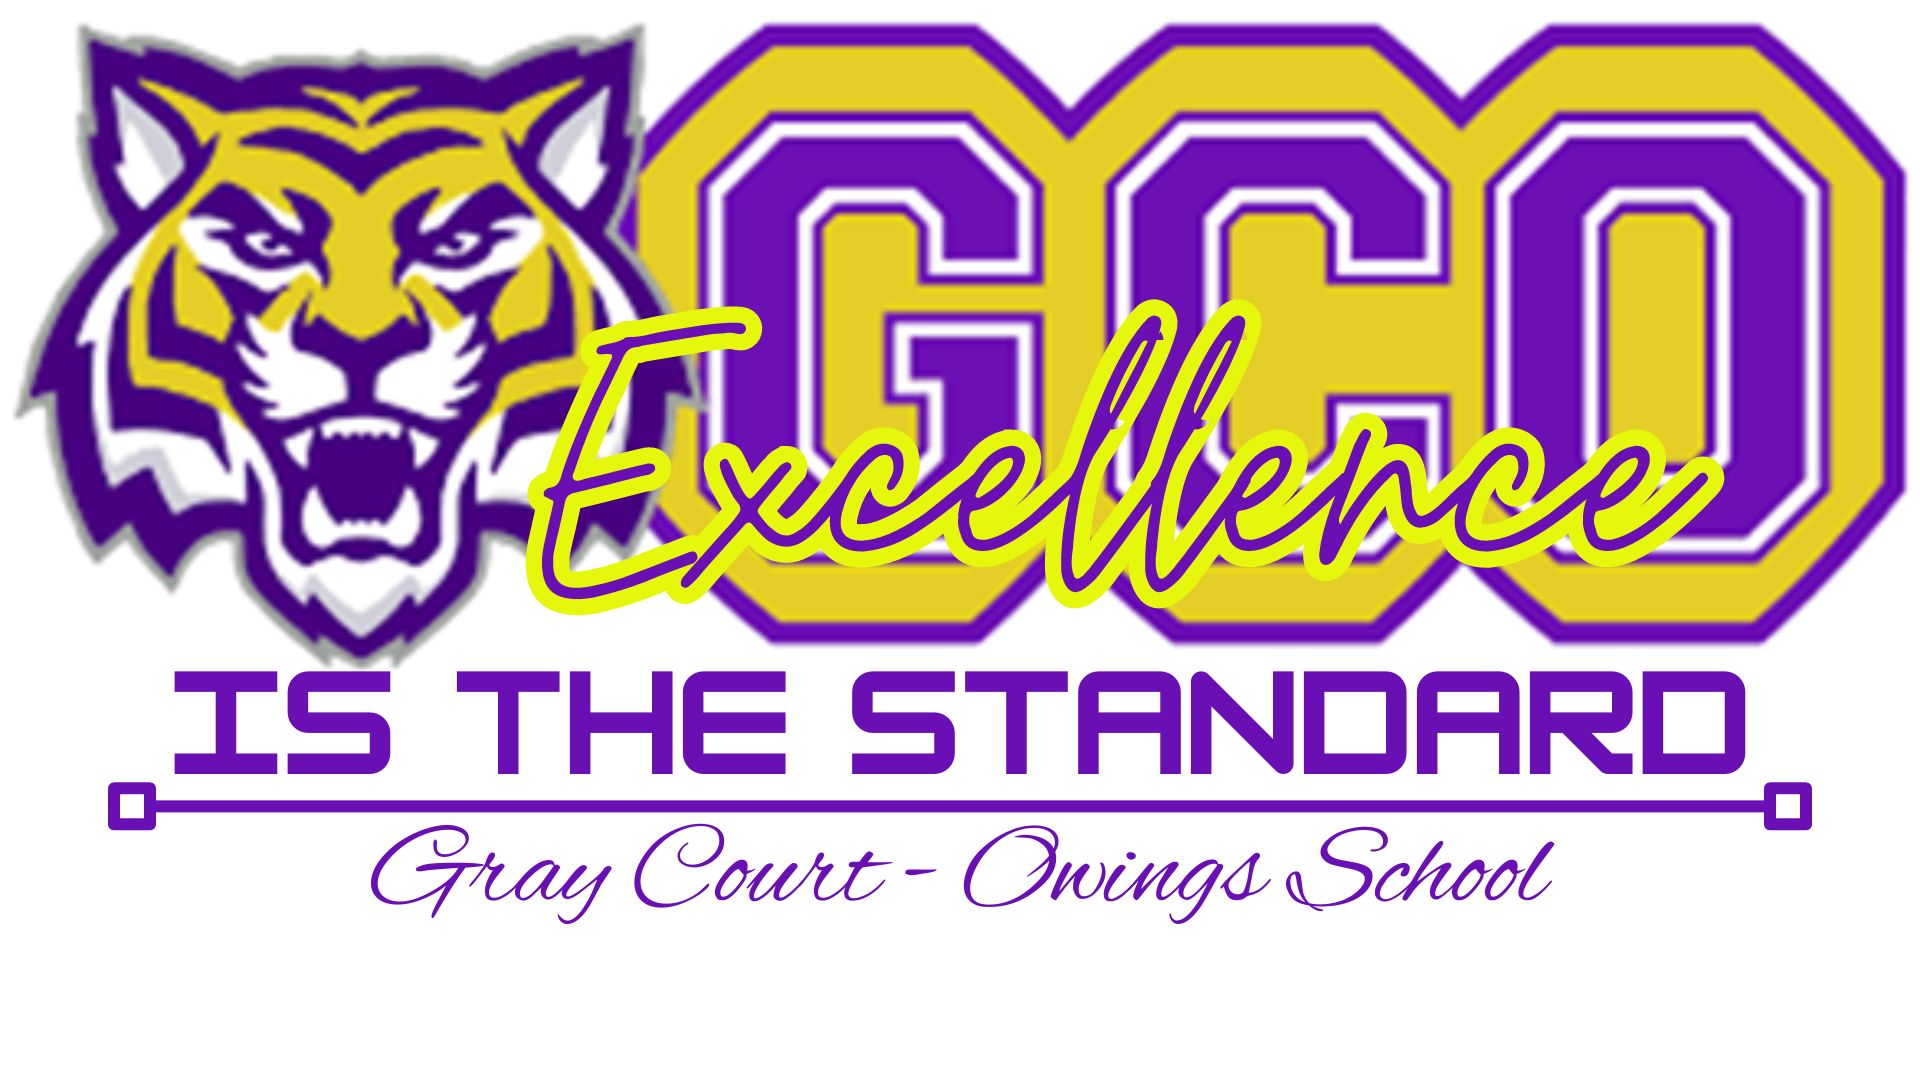 GCO's updated logo